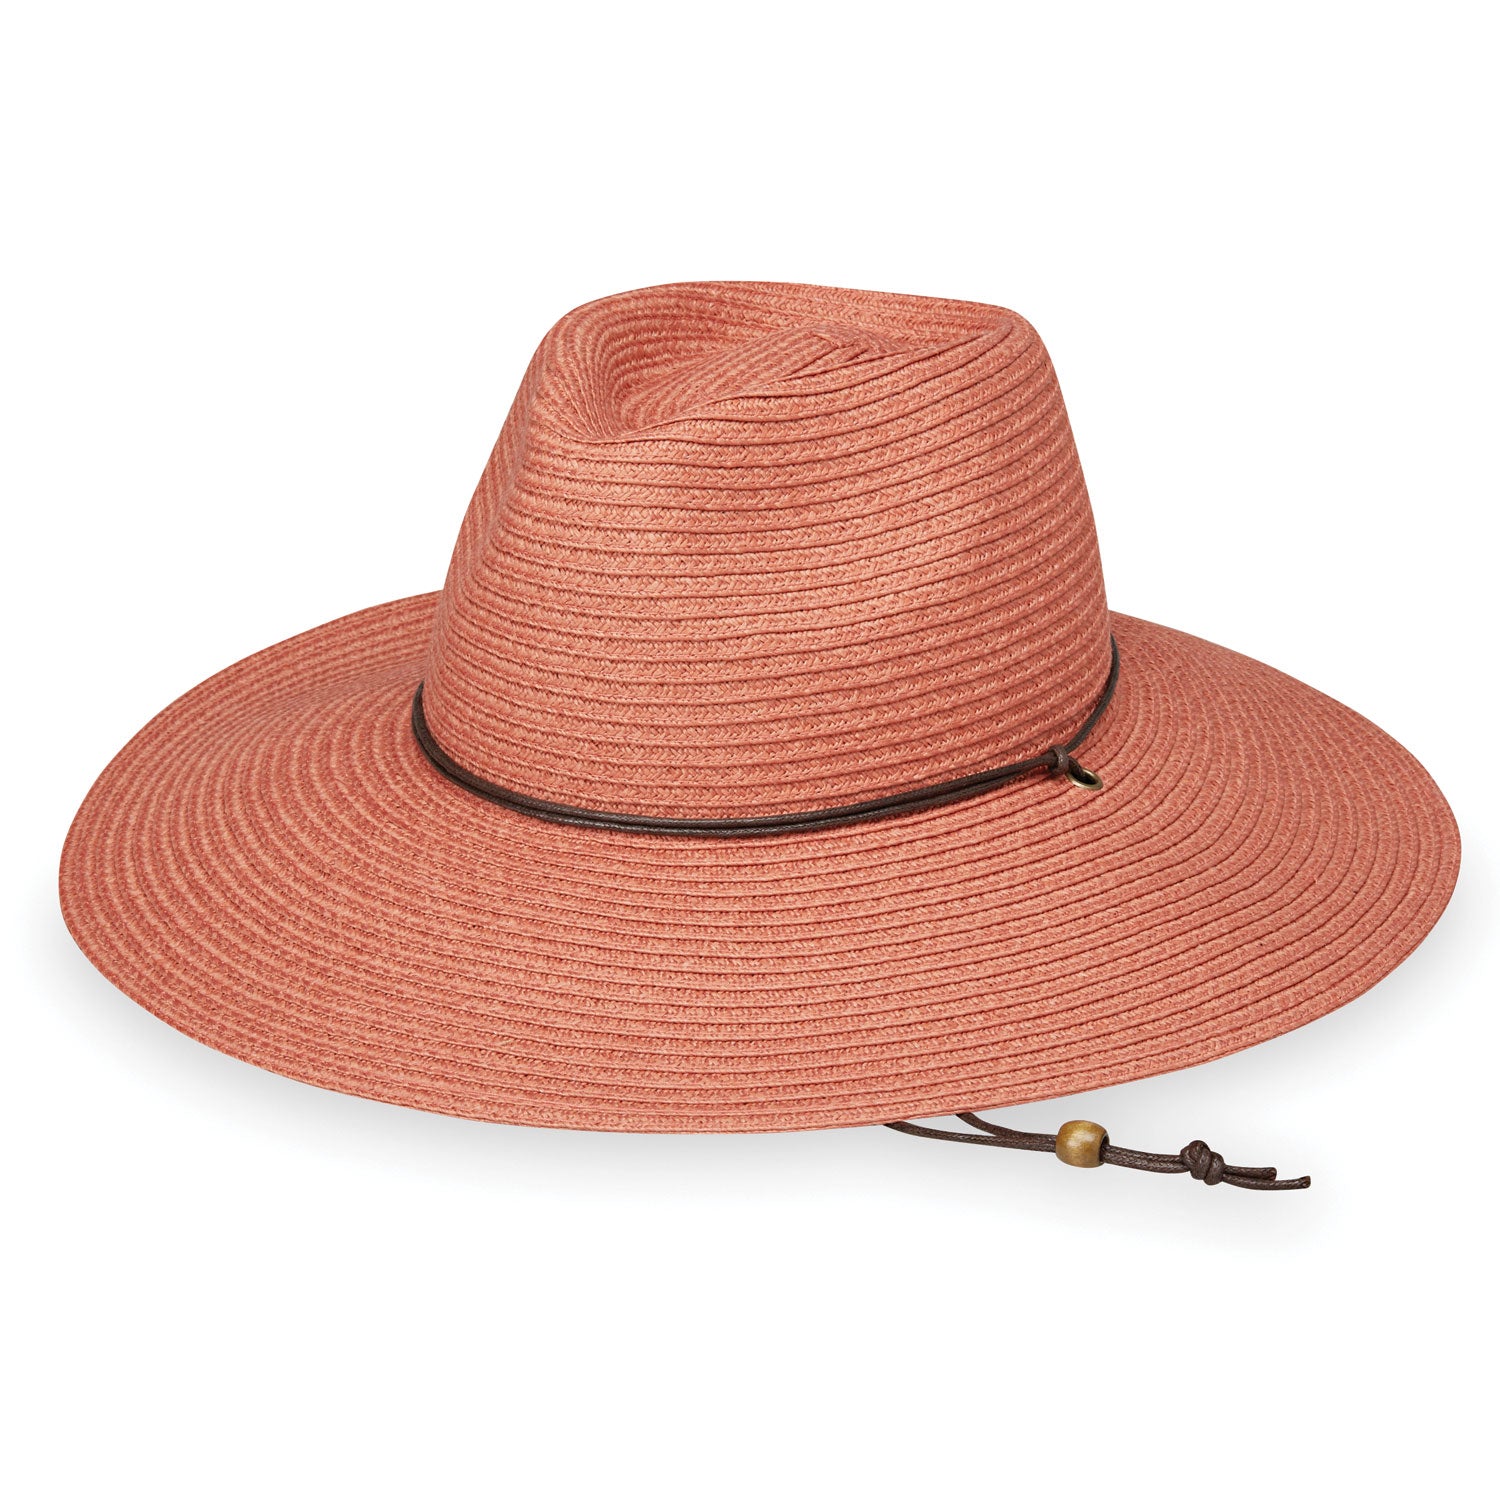 Featuring Ladies' Packable Sanibel Beach Sun Hat in Coral from Wallaroo